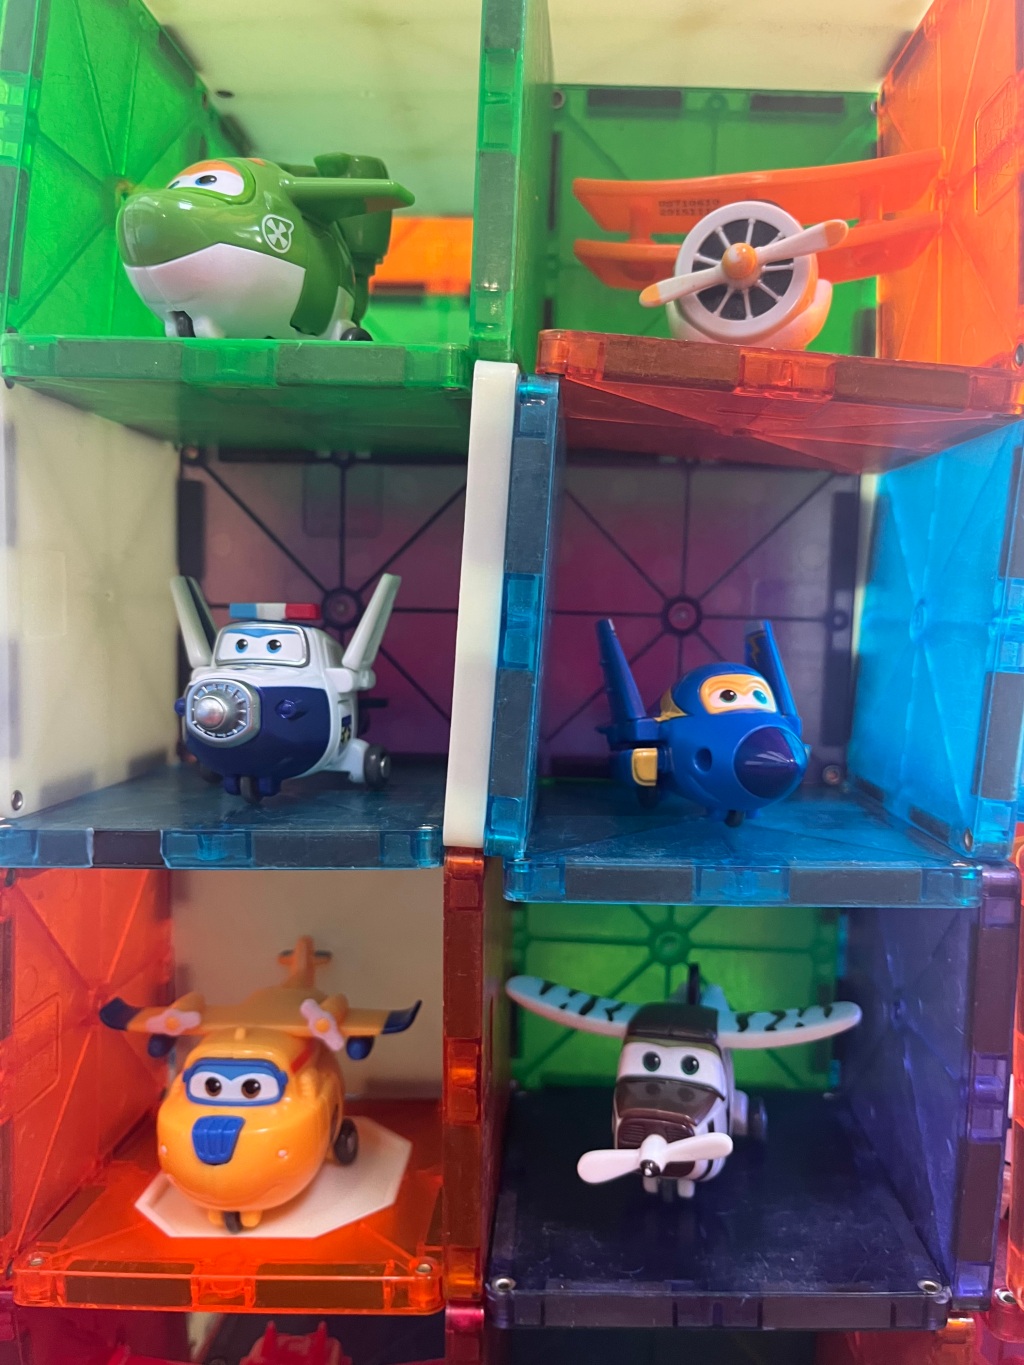 Super Wings tranformer figure toys inside Magna-Tiles magnetic block toy tower